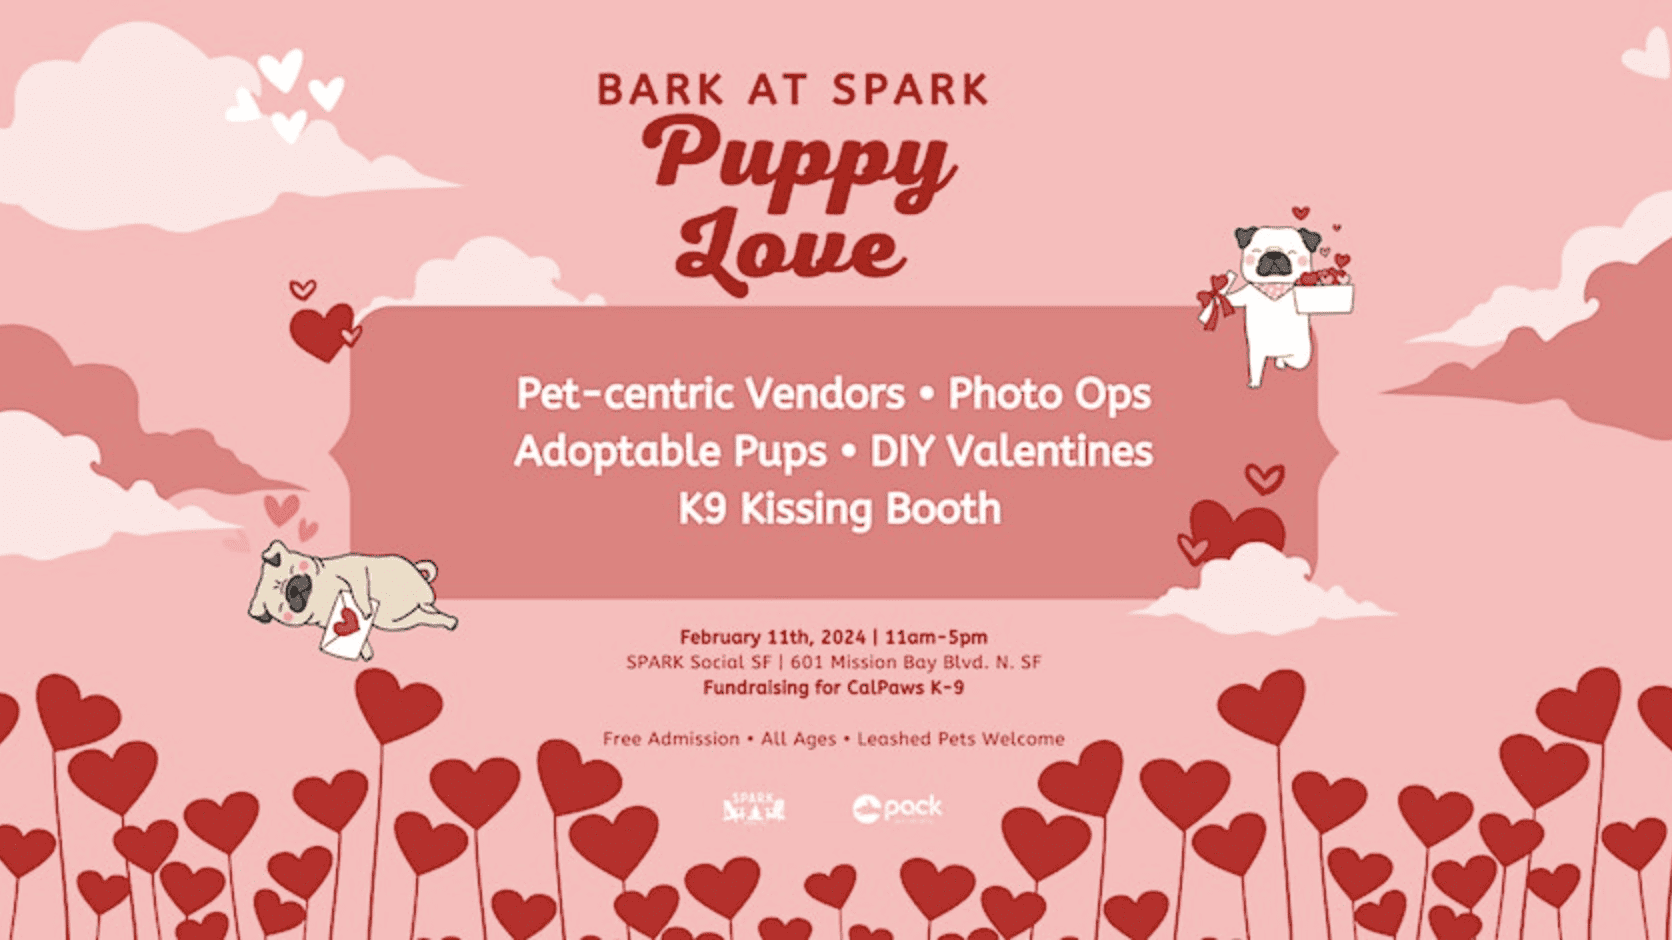 Bark at SPARK "Puppy Love"